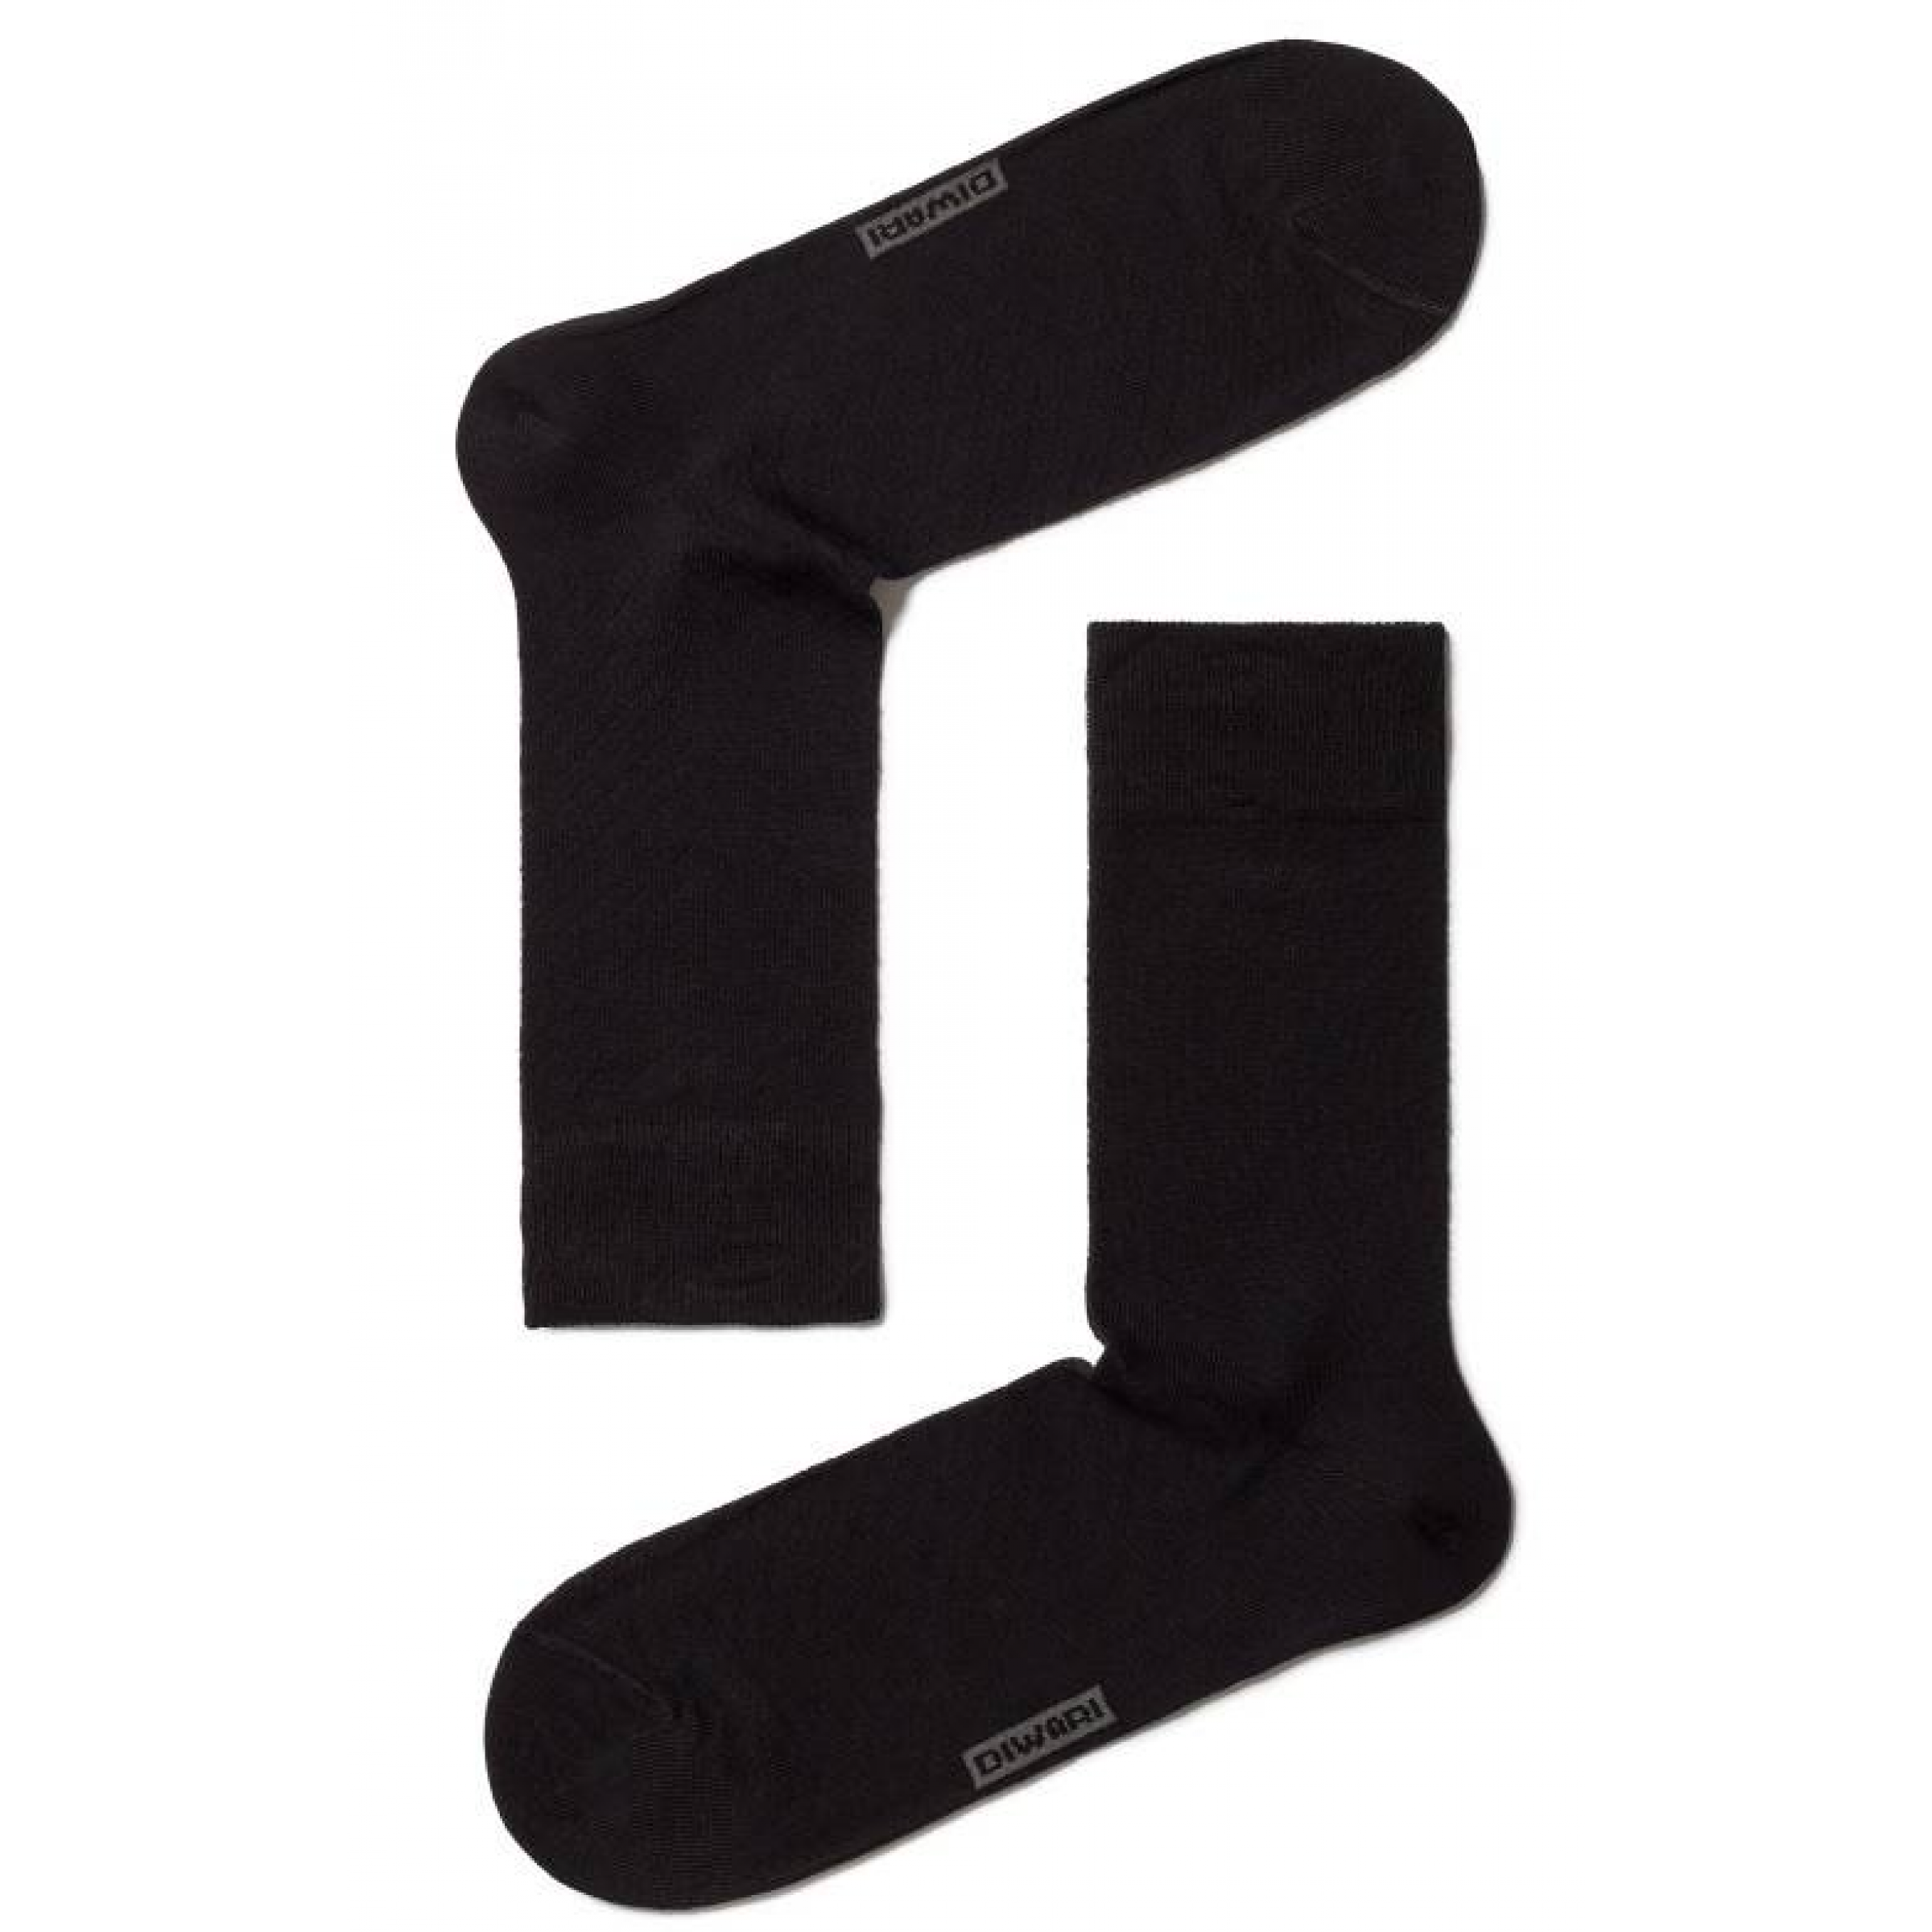 Мужские носки Conte Classic Effect 44-45 размер черный цвет 1 пара